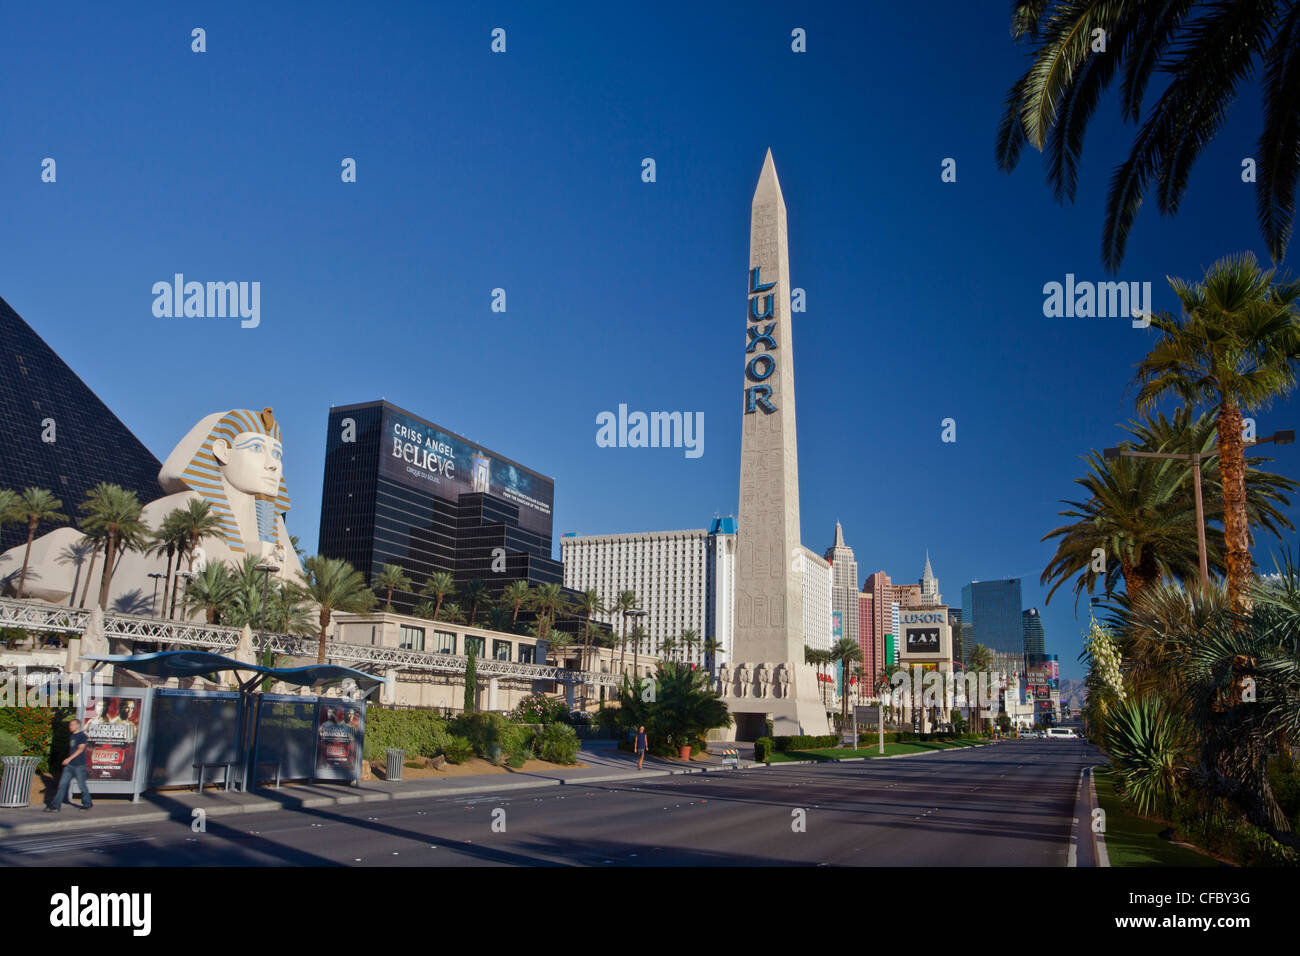 USA, USA, Amerika, Nevada, Las Vegas, Stadt, Strip, Avenue, Luxor Hotel, Architektur, Casino, bunt, Unterhaltung Stockfoto